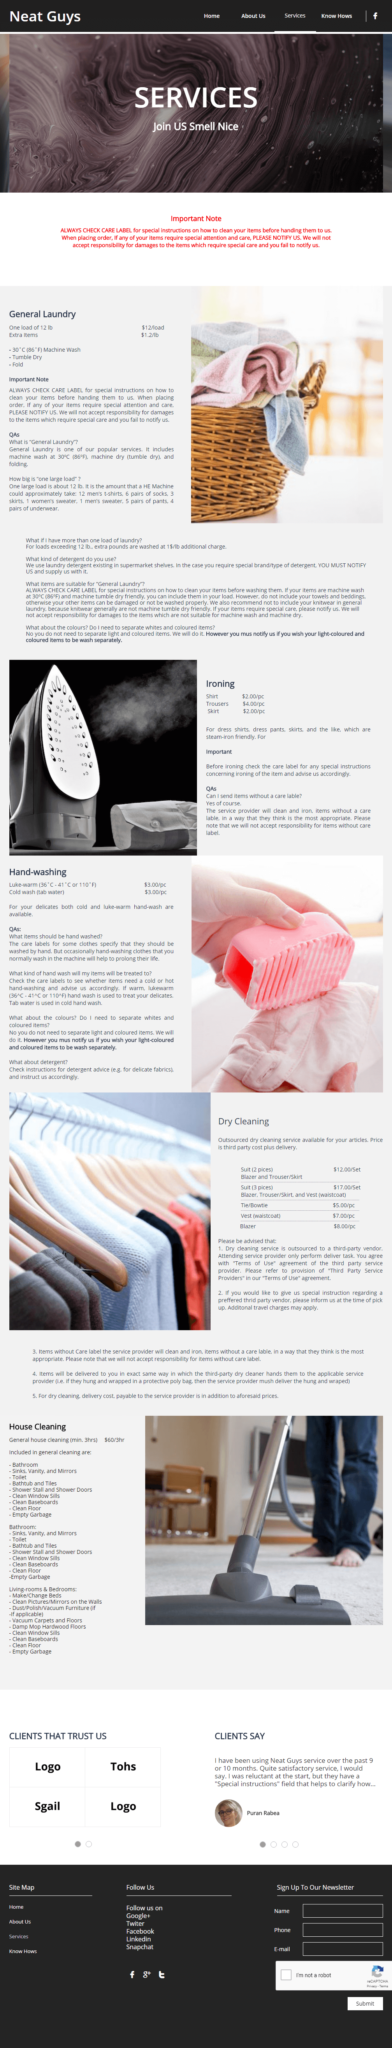 We Wash - Services - Screenshot